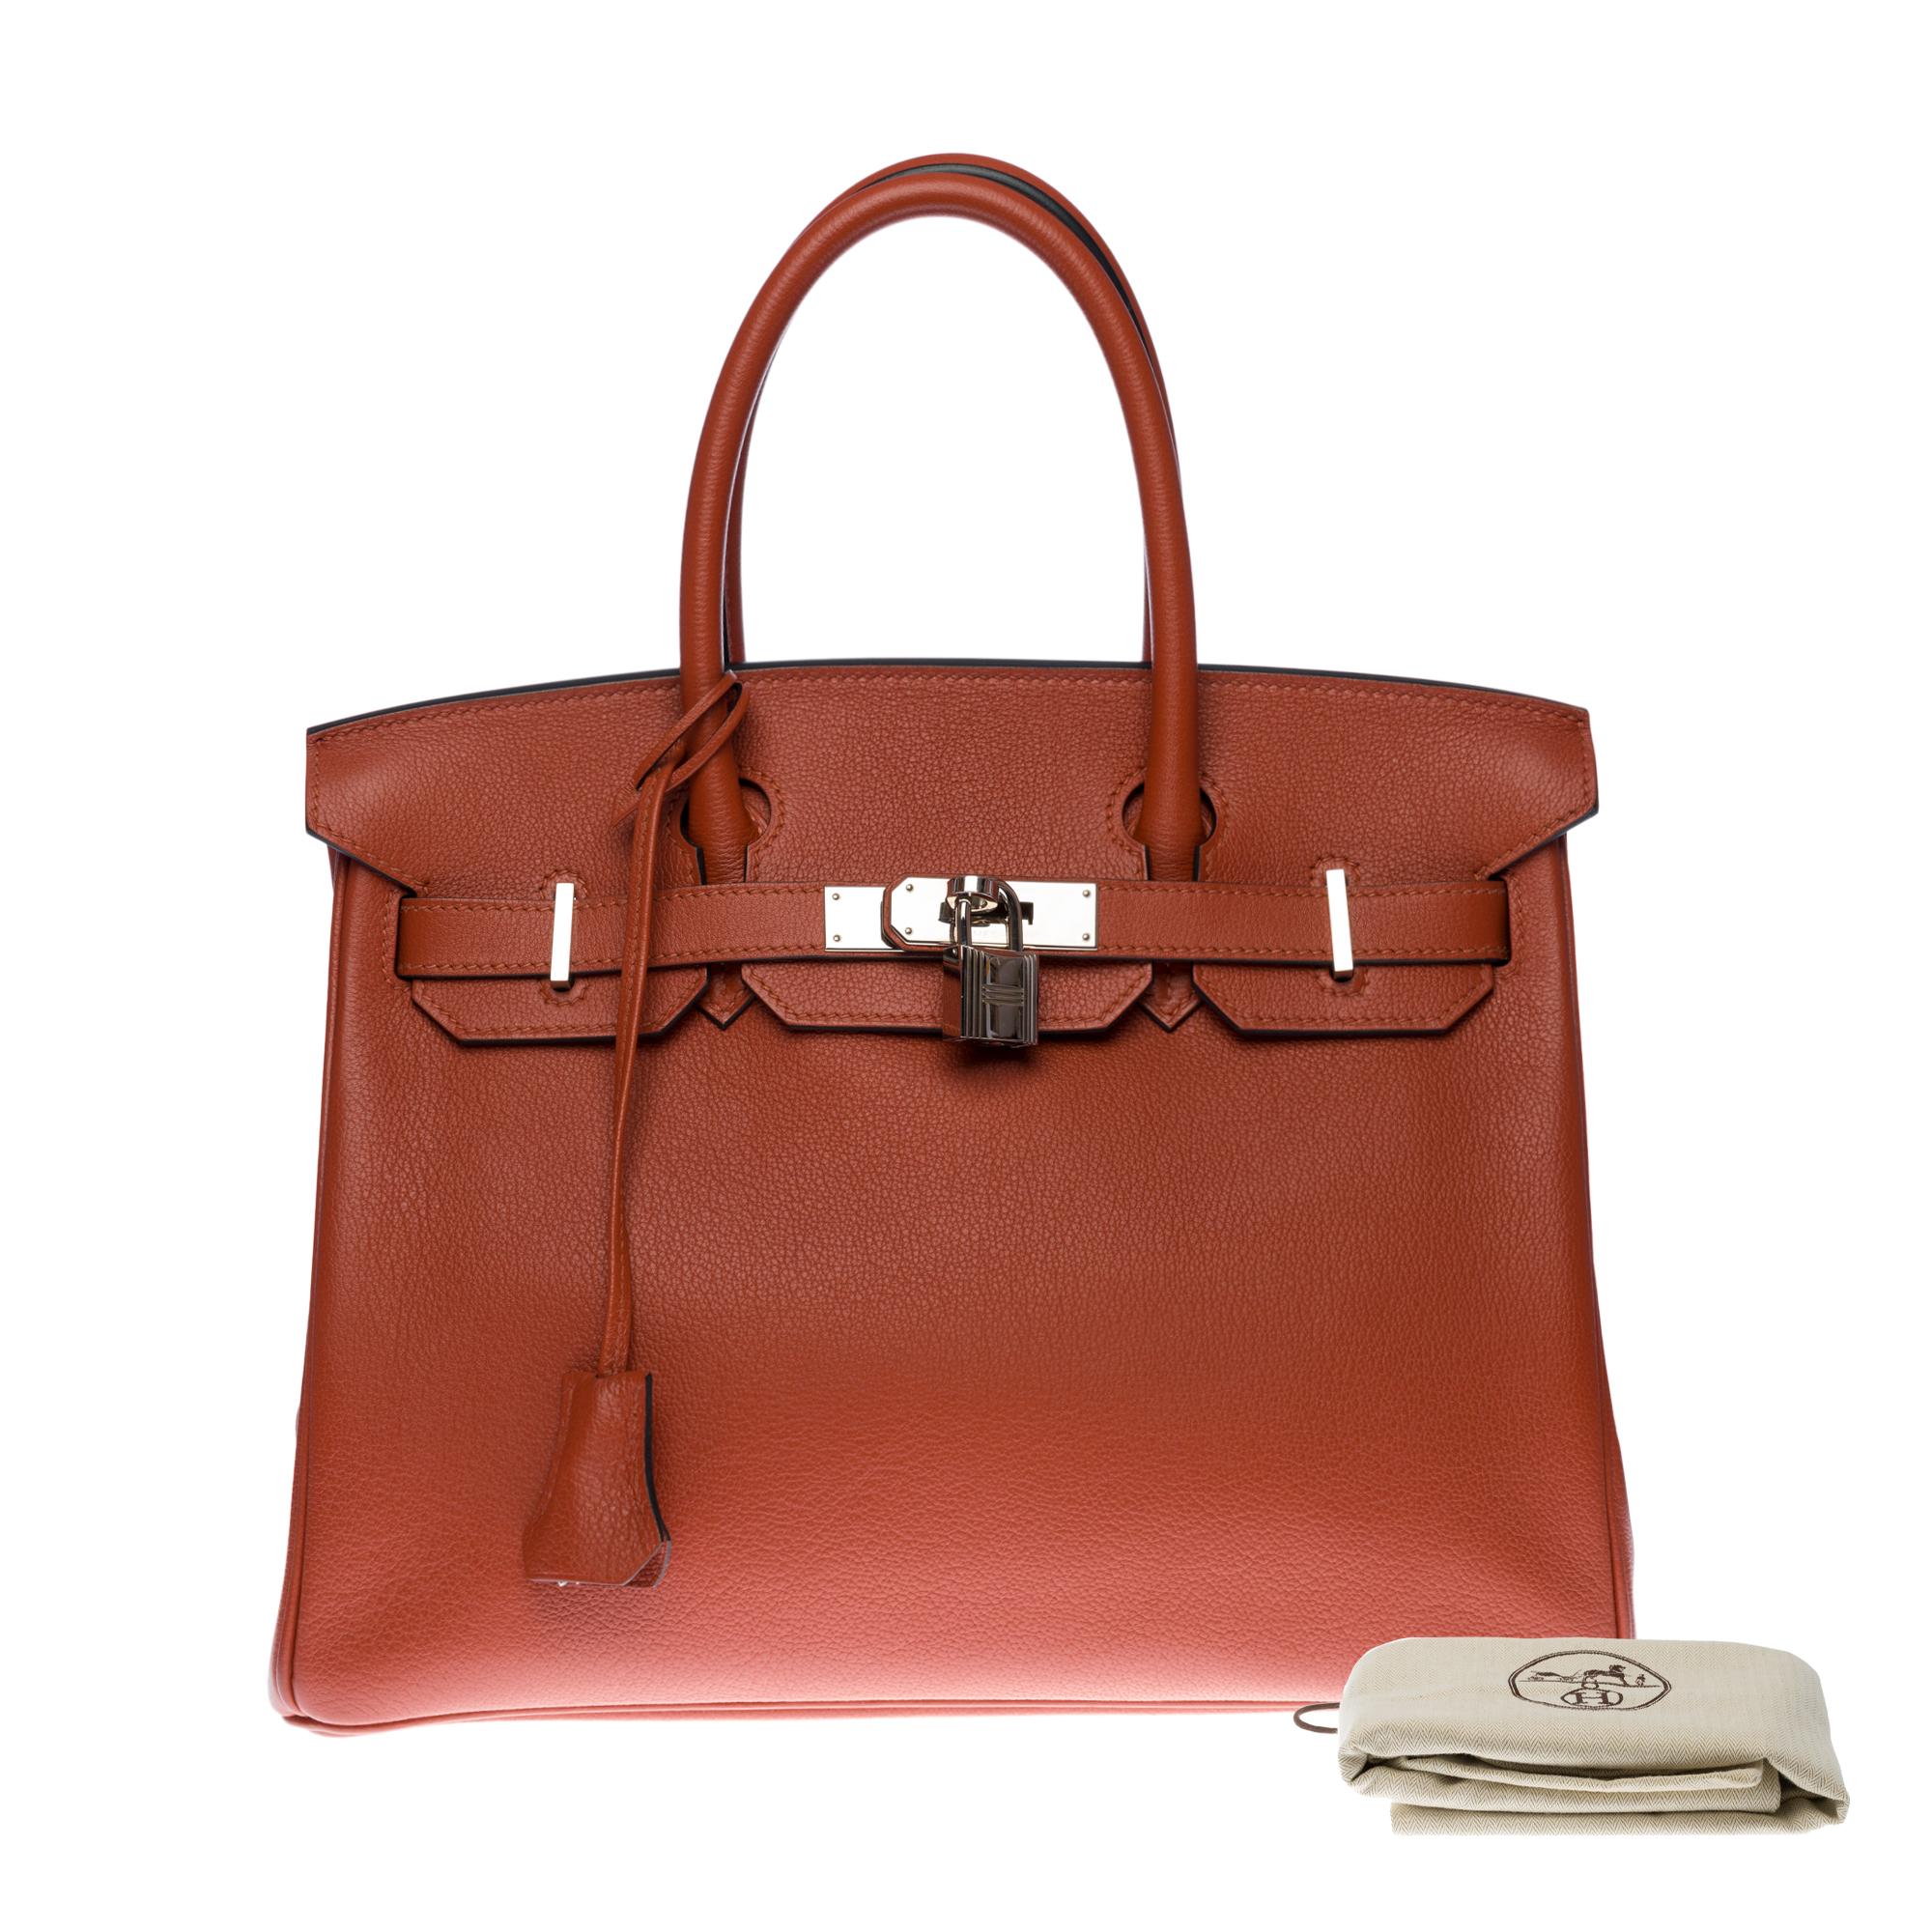 Stunning Hermès Birkin 30 handbag in Cuivre/Copper Mysore Goat leather, SHW 3